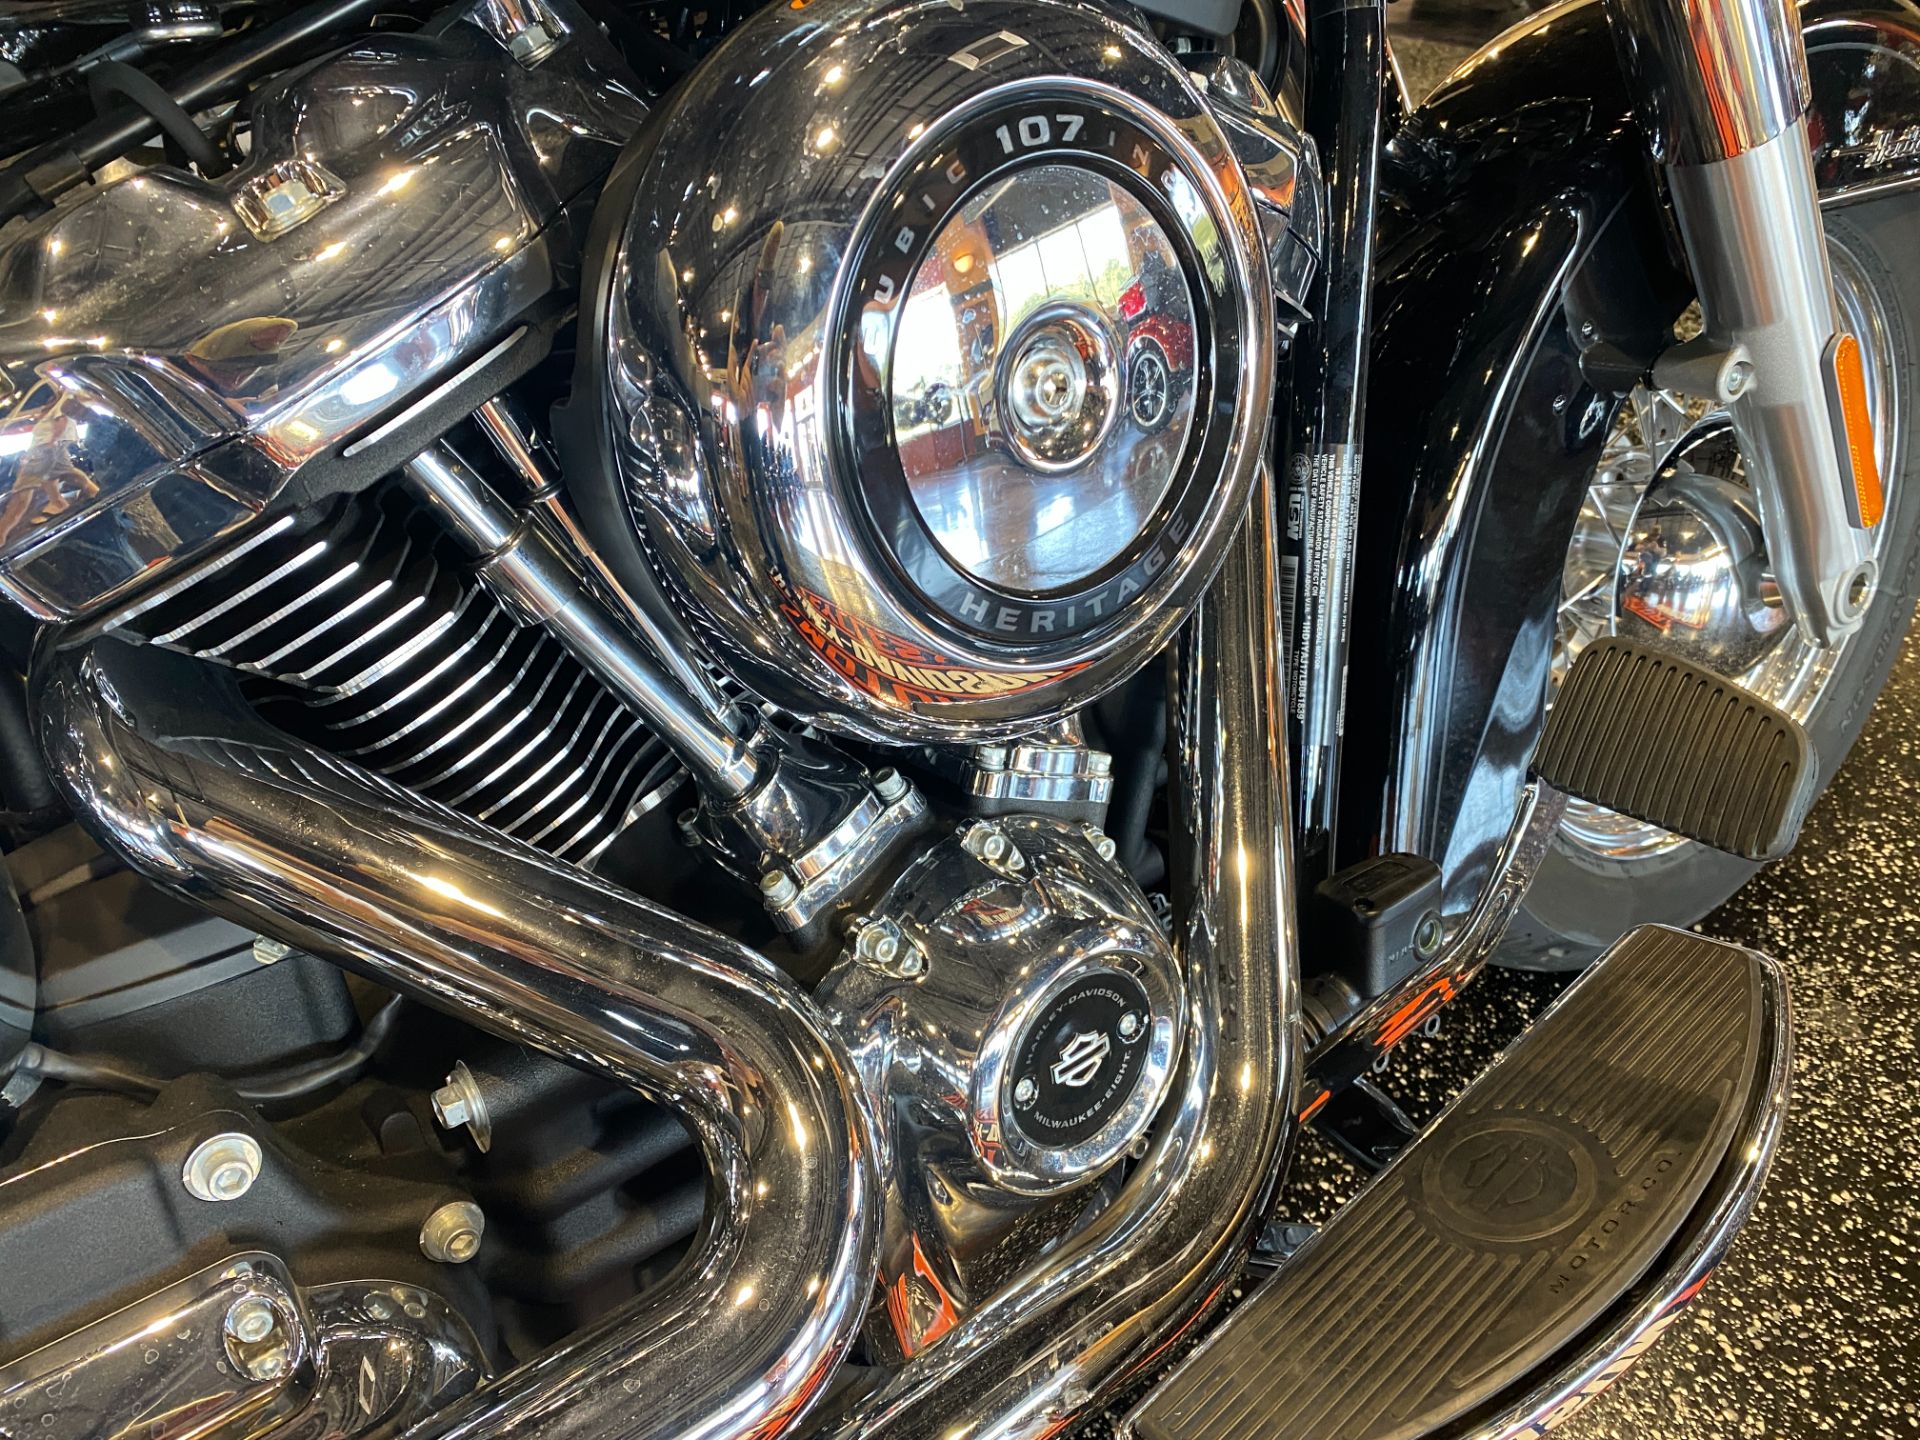 2020 Harley-Davidson Heritage Classic in Mount Vernon, Illinois - Photo 6